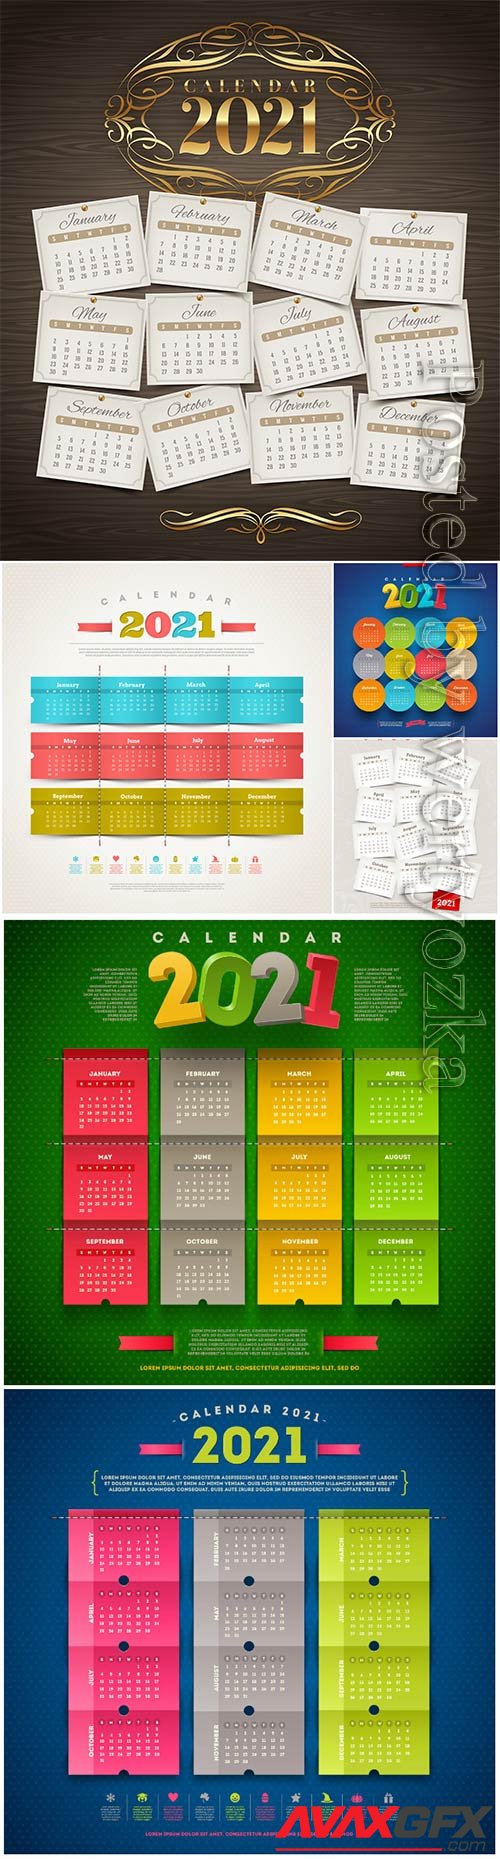 Calendar for 2021 year template vector design